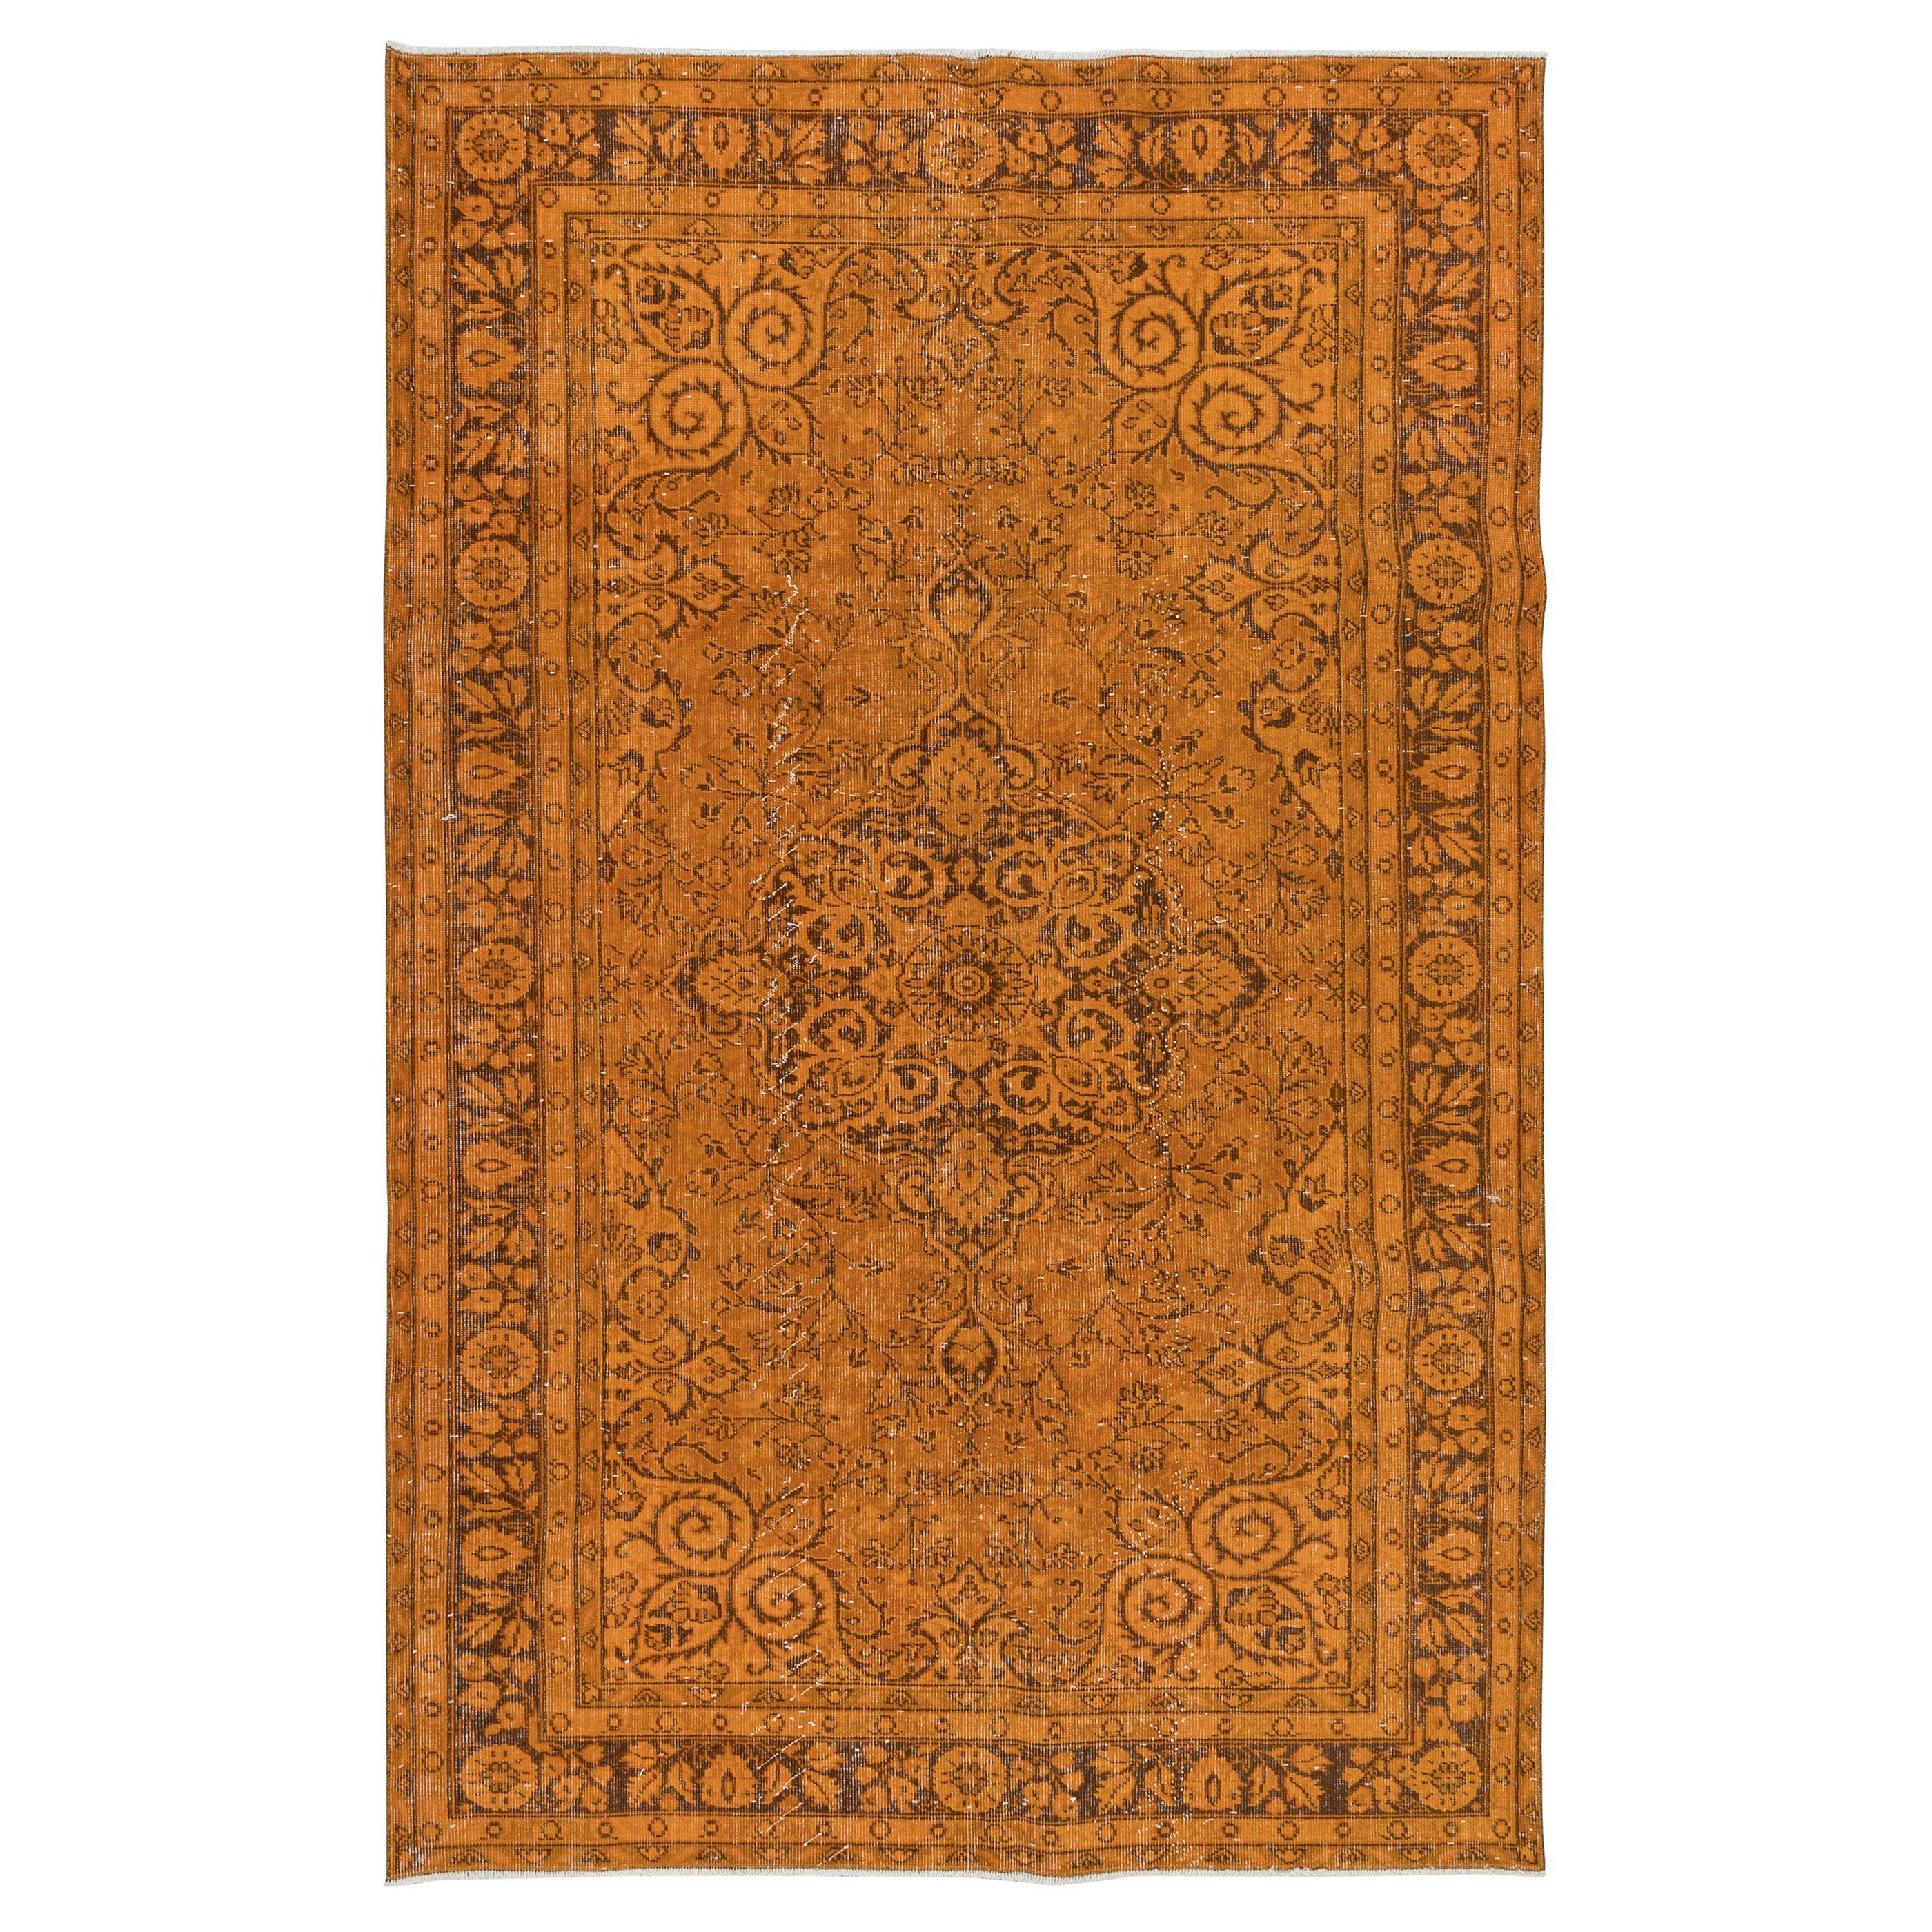 5.7x9 Ft Hand Made Central Anatolian Area Rug in Orange, Modern Wool Carpet (Tapis de laine moderne)